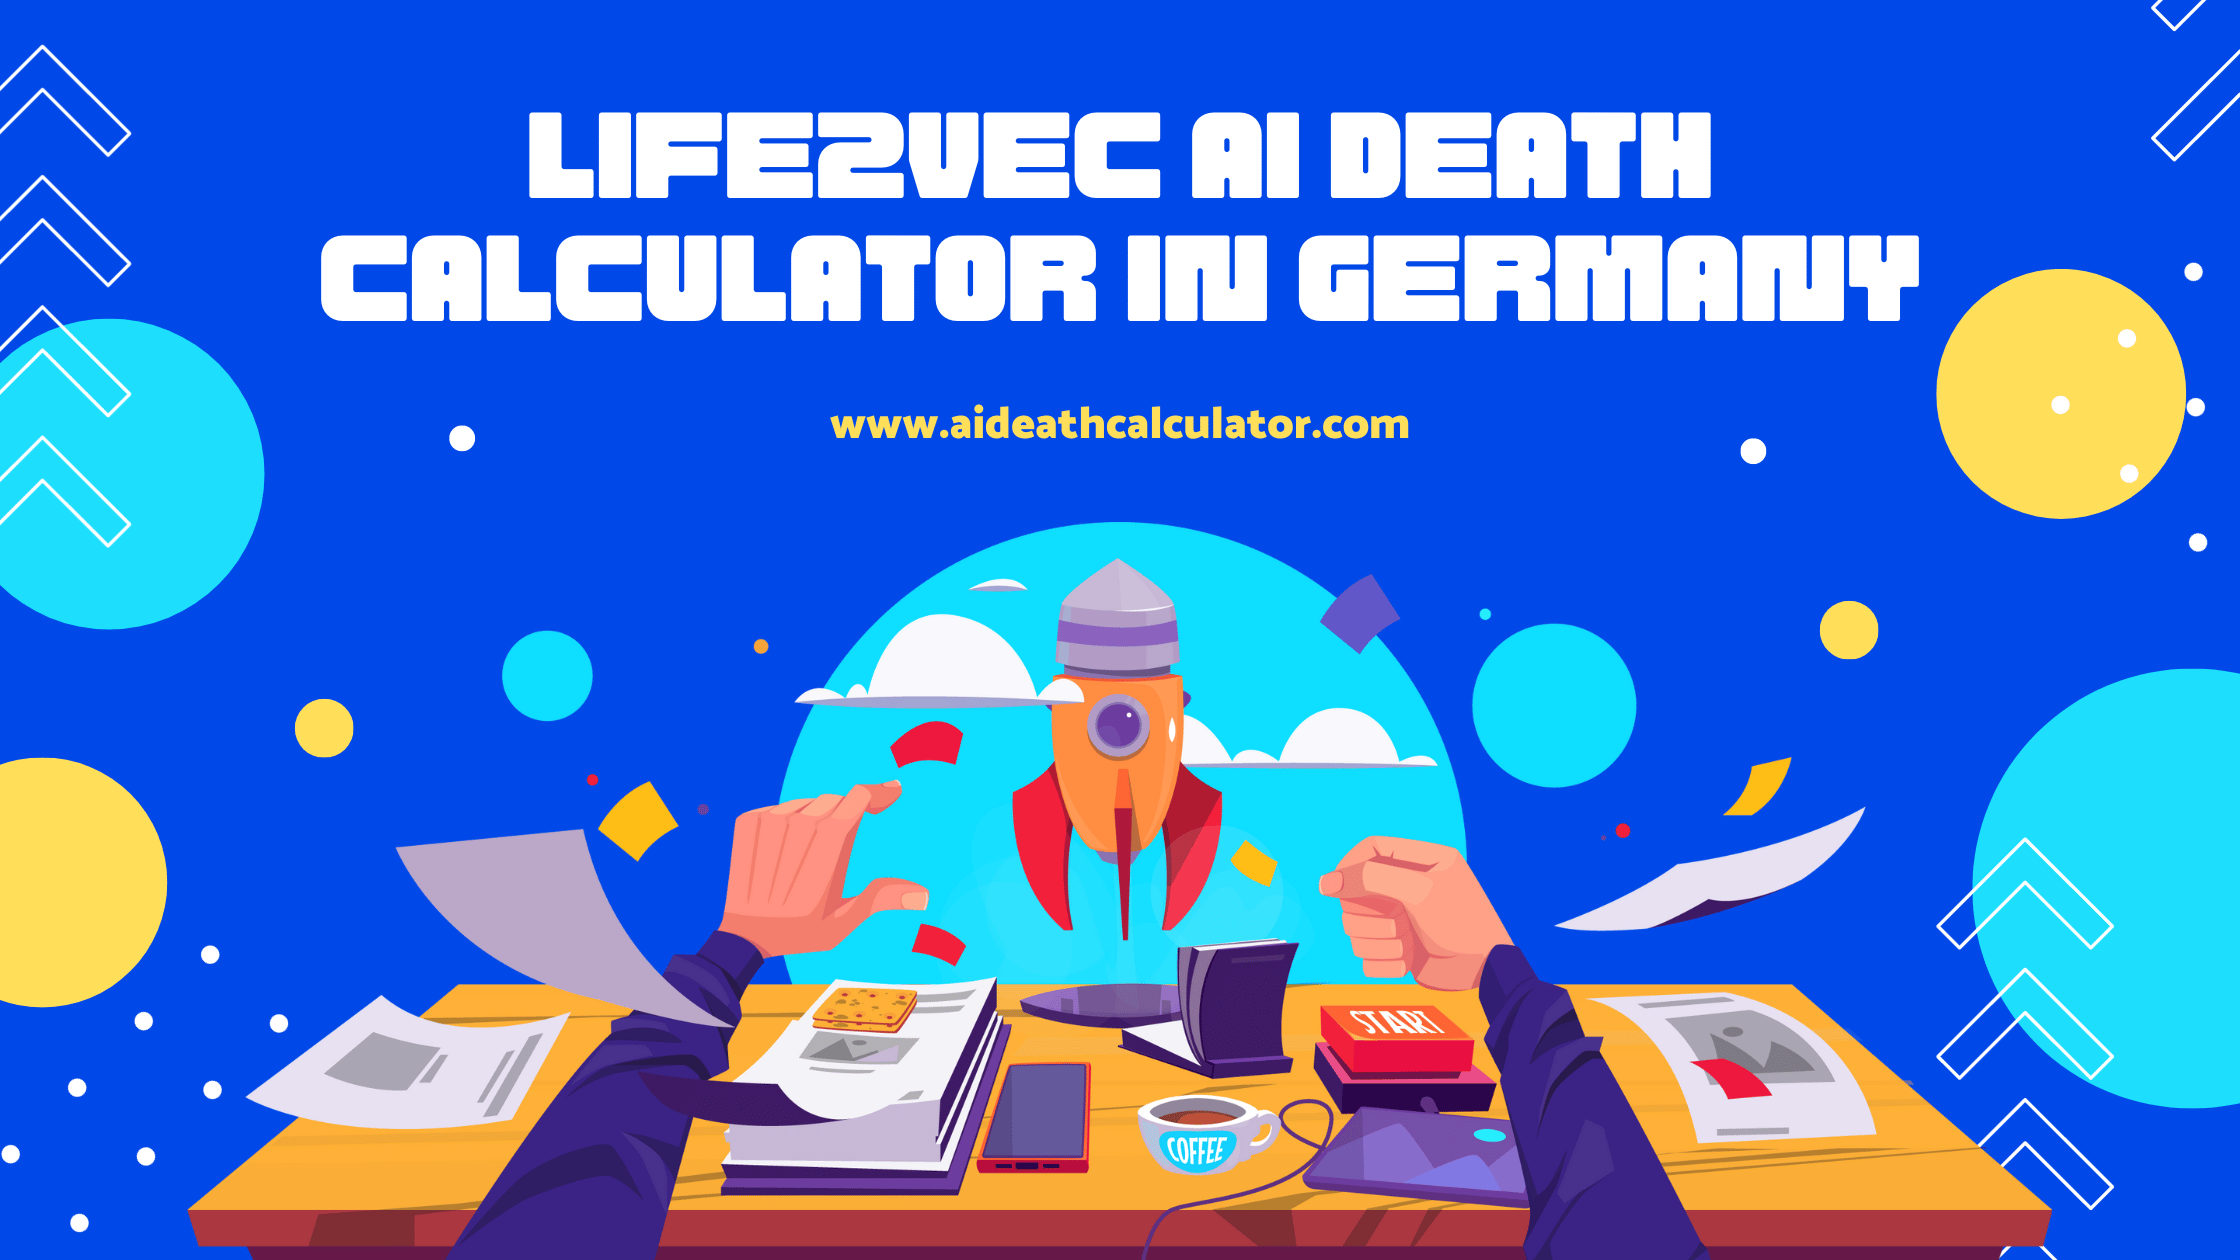 Life2Vec AI Death Calculator in Germany